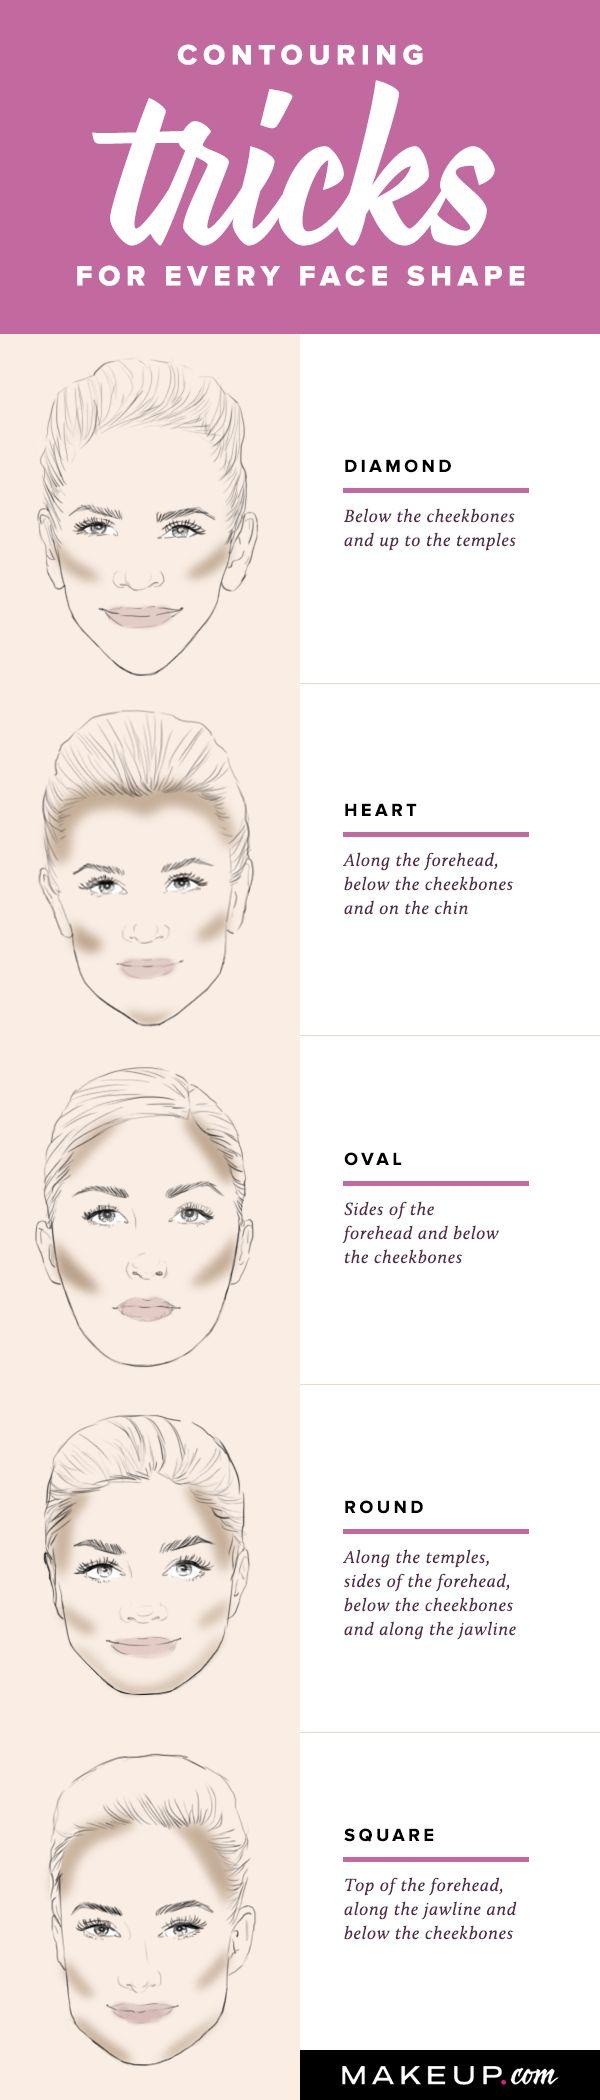 Hochzeit - How To Contour For Your Face Shape